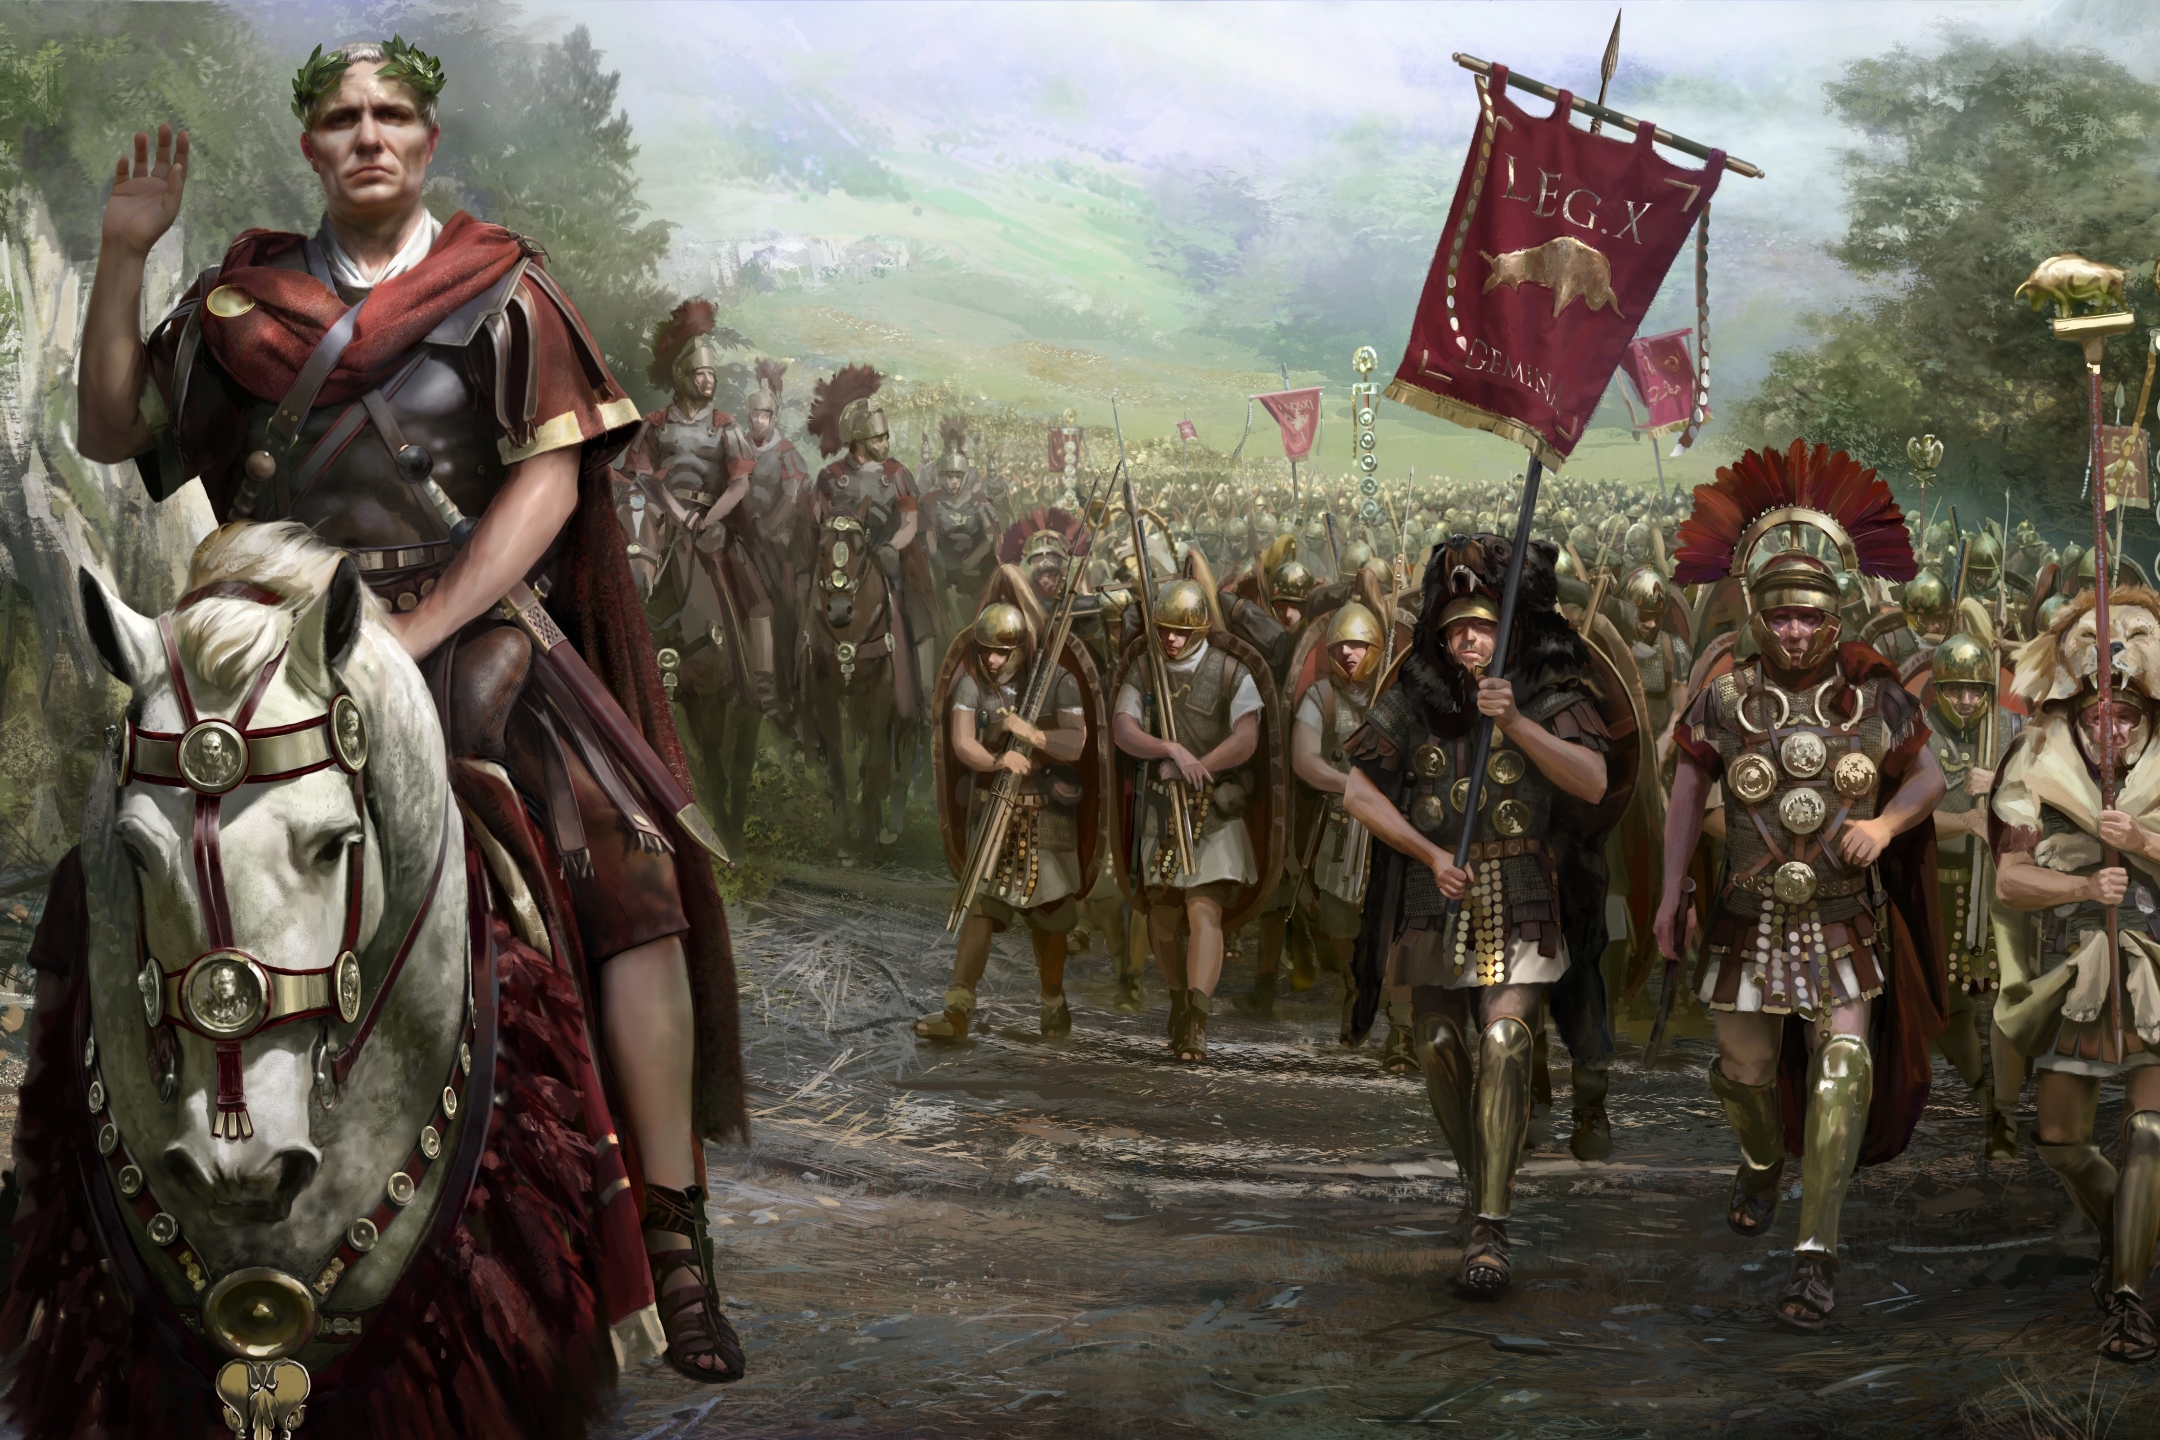 1164399 Bild herunterladen computerspiele, total war: rome ii, soldat, römische legion, heer, totaler krieg - Hintergrundbilder und Bildschirmschoner kostenlos